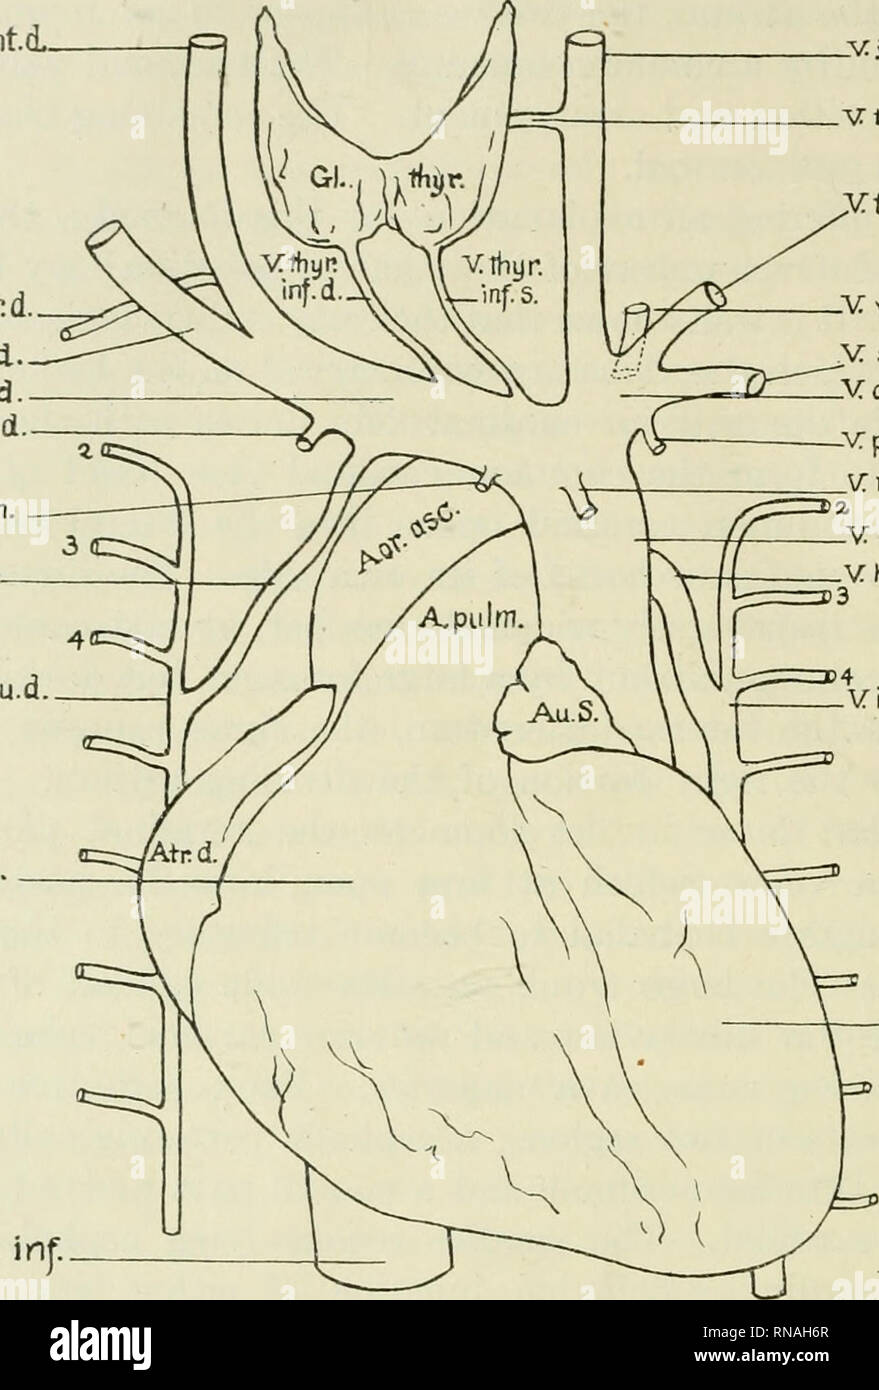 . The anatomical record. Anatomy; Anatomy. 194 WILBUR C. SMITH vjug.int.d. Vfnferc. supnd. Vsubcl.d. Vanom. d. Vmont irttd. v:%m. v: interc. Su.d V&amp;nt. d. v:ca/. Jnj:. -Vjug.ints. VthyKfTied.S. Xtrans, scap. -V verfeb.s. y subel.s. -V anom.s. -v: peric. phr. v: mam. lots. V cav. ^up. V hem'iaz 1 V interc so. s. -Venf. S. SOi^'/v^ST^ Fig. 1 Ventral aspect of heart and thoracic veins ABBREVIATIONS USED IN FIGURES 1 AND 2 A.pulm., A. pulmonalis Aor.asc, Aorta ascendens Atr.d., Atrium dextrum Au.s., Auricula sinistra Gl.thyr., Glandula thyreoidea V.anom.d., V. anonyma dextra V.anom.s., V. ano Stock Photo